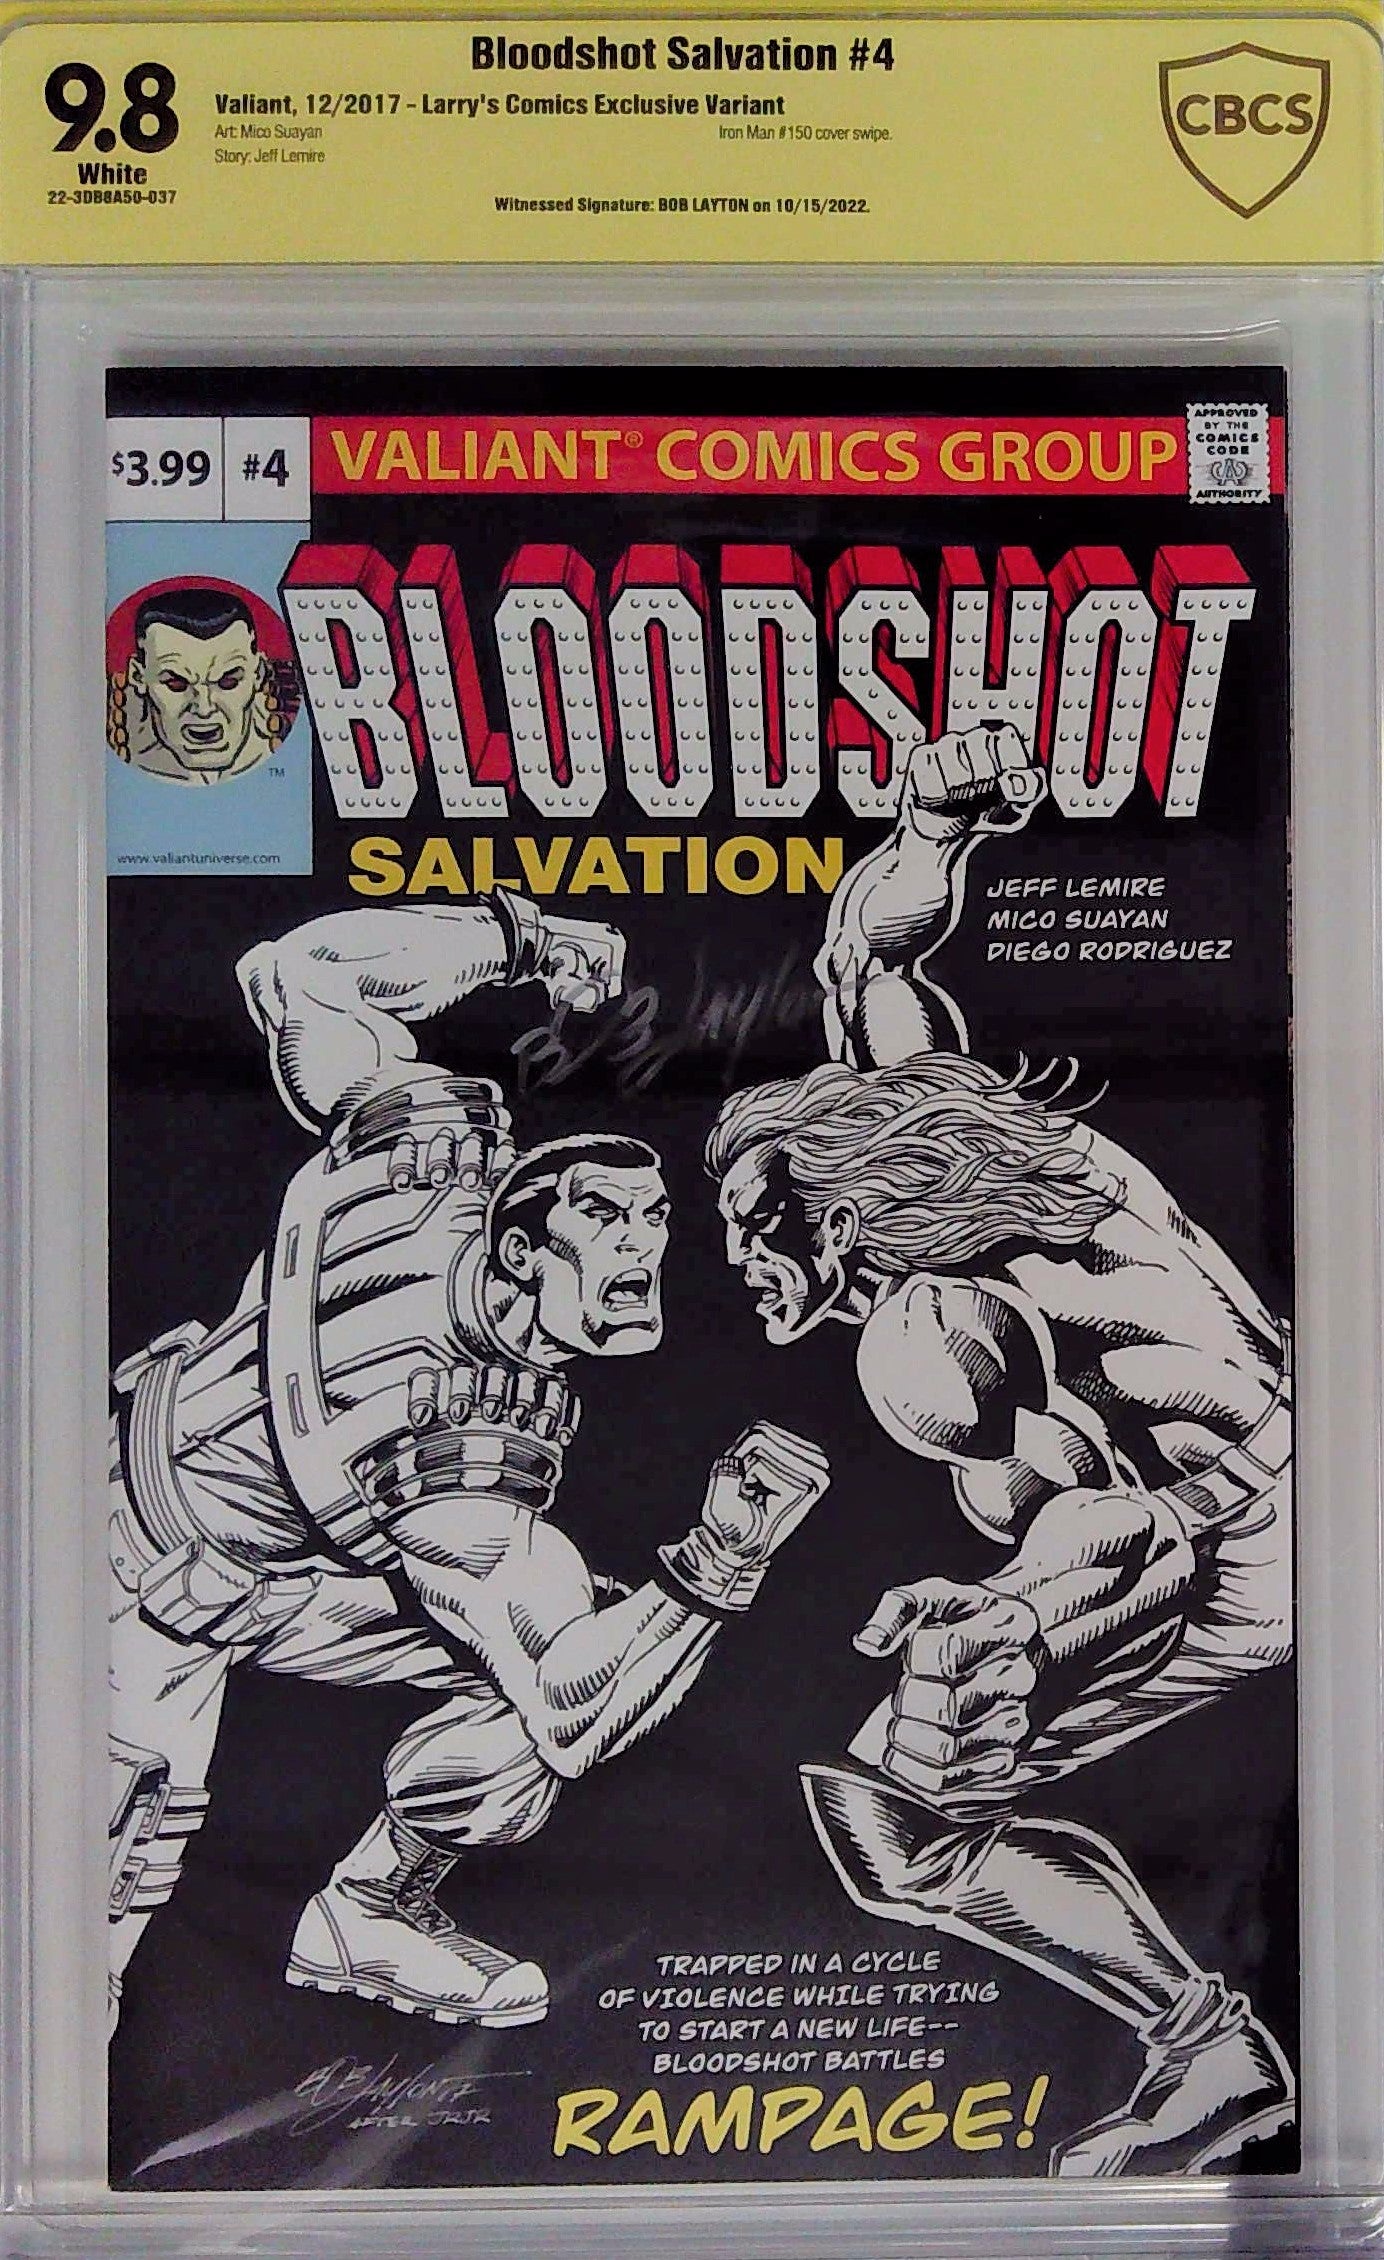 Bloodshot Salvation #4 Larry's Comics Exclusive Variant CBCS 9.8 Yellow Label Bob Layton